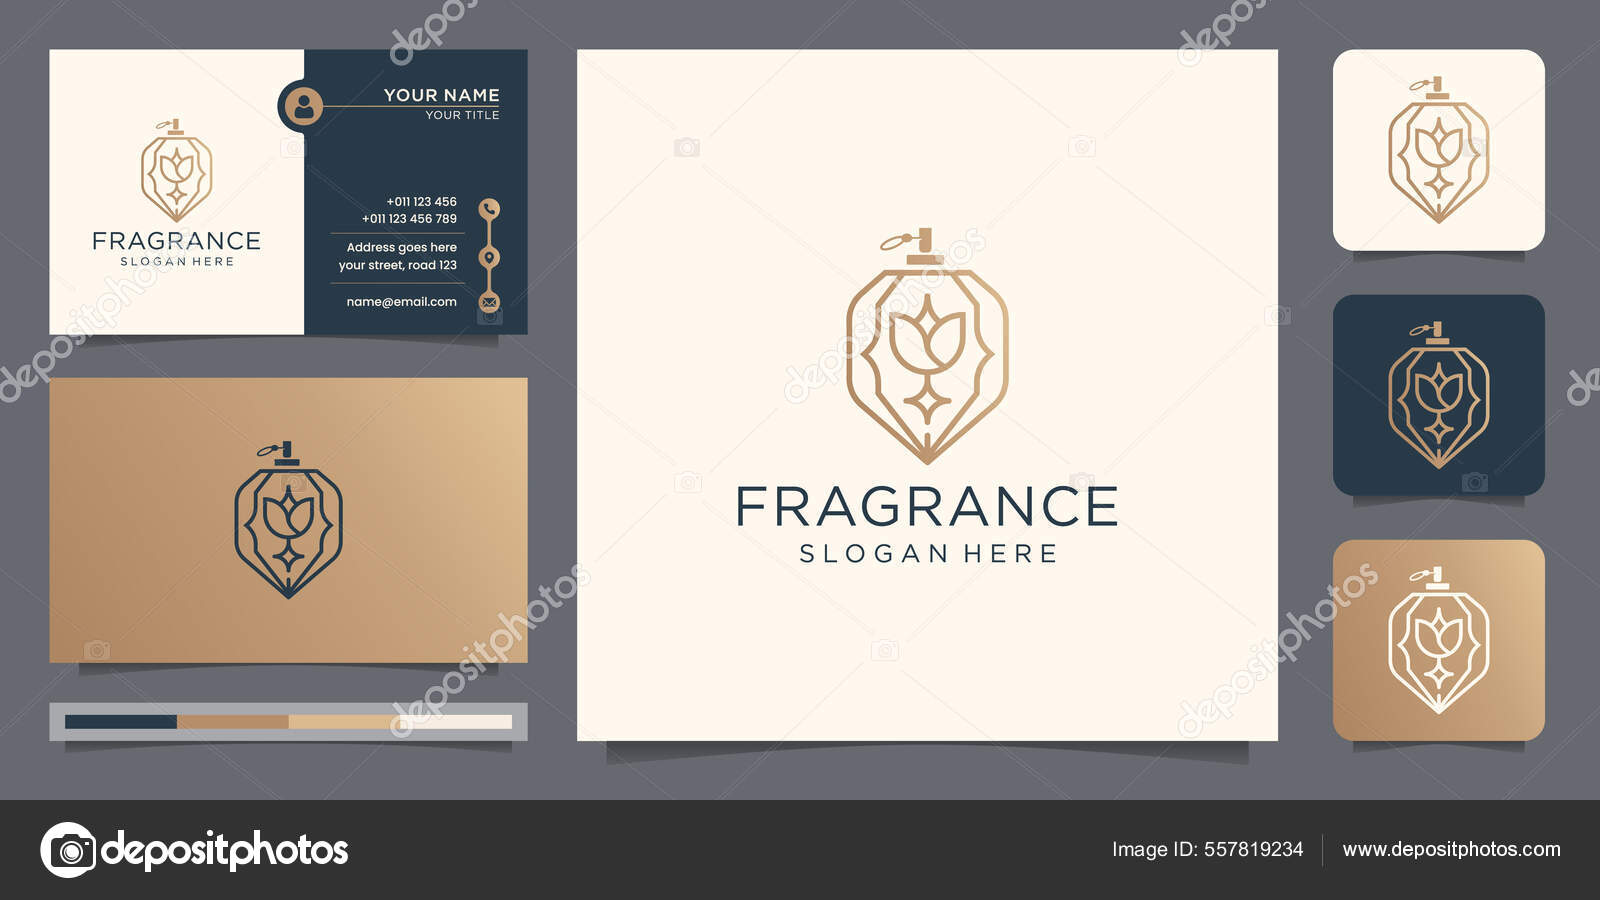 Premium Vector, Luxury perfume logo template concept